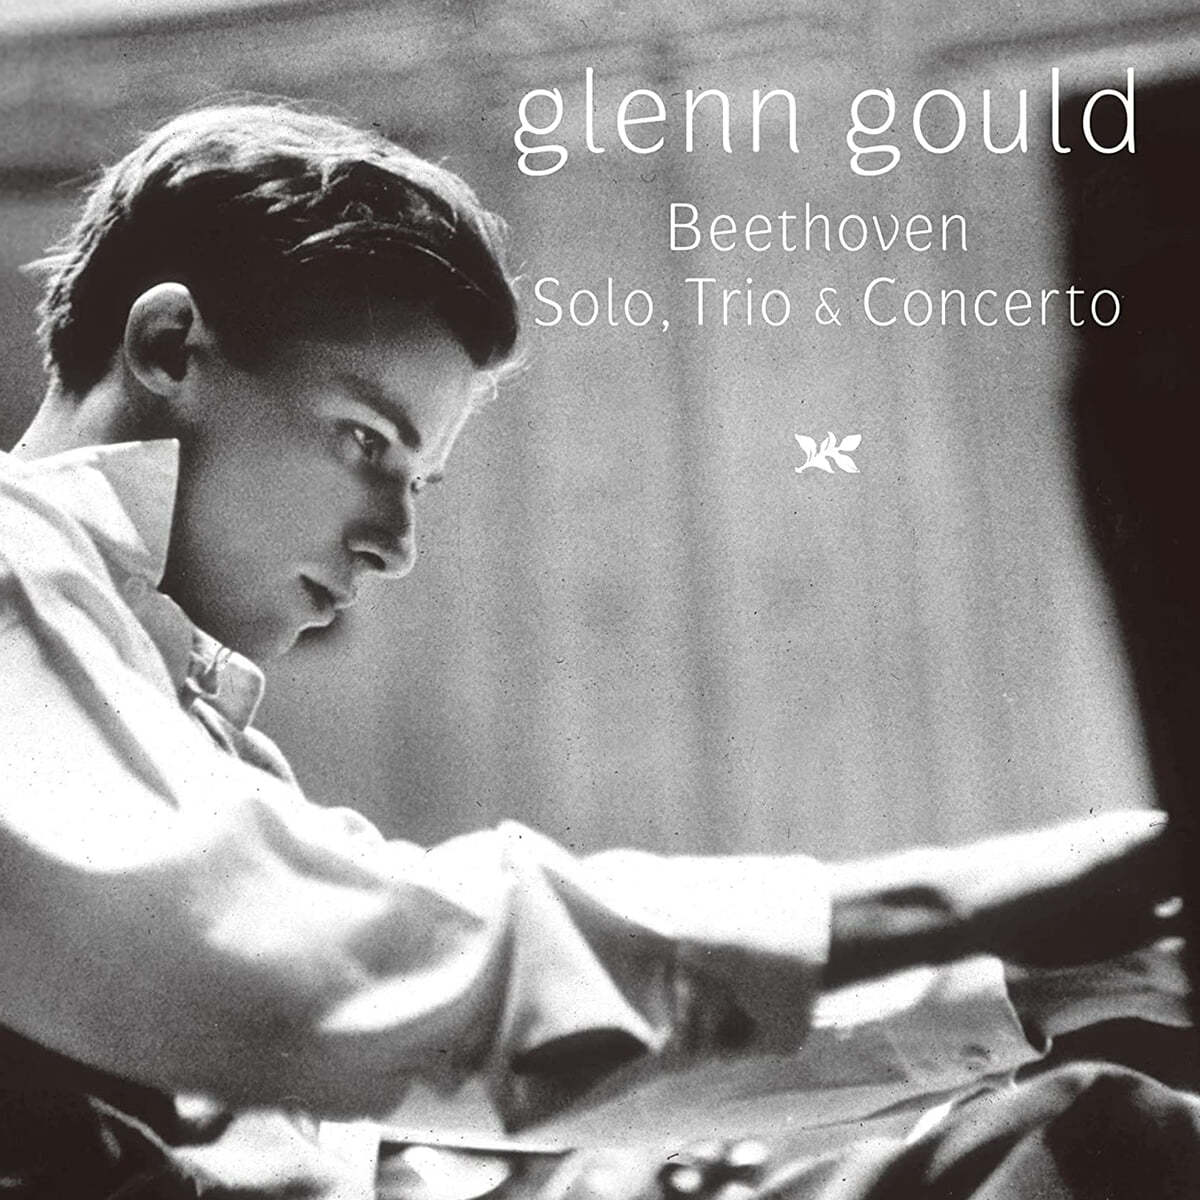 Glenn Gould 베토벤: 피아노 독주, 삼중주, 협주곡 - 글렌 굴드 (Beethoven: Piano Solo, Trio and Concerto) 